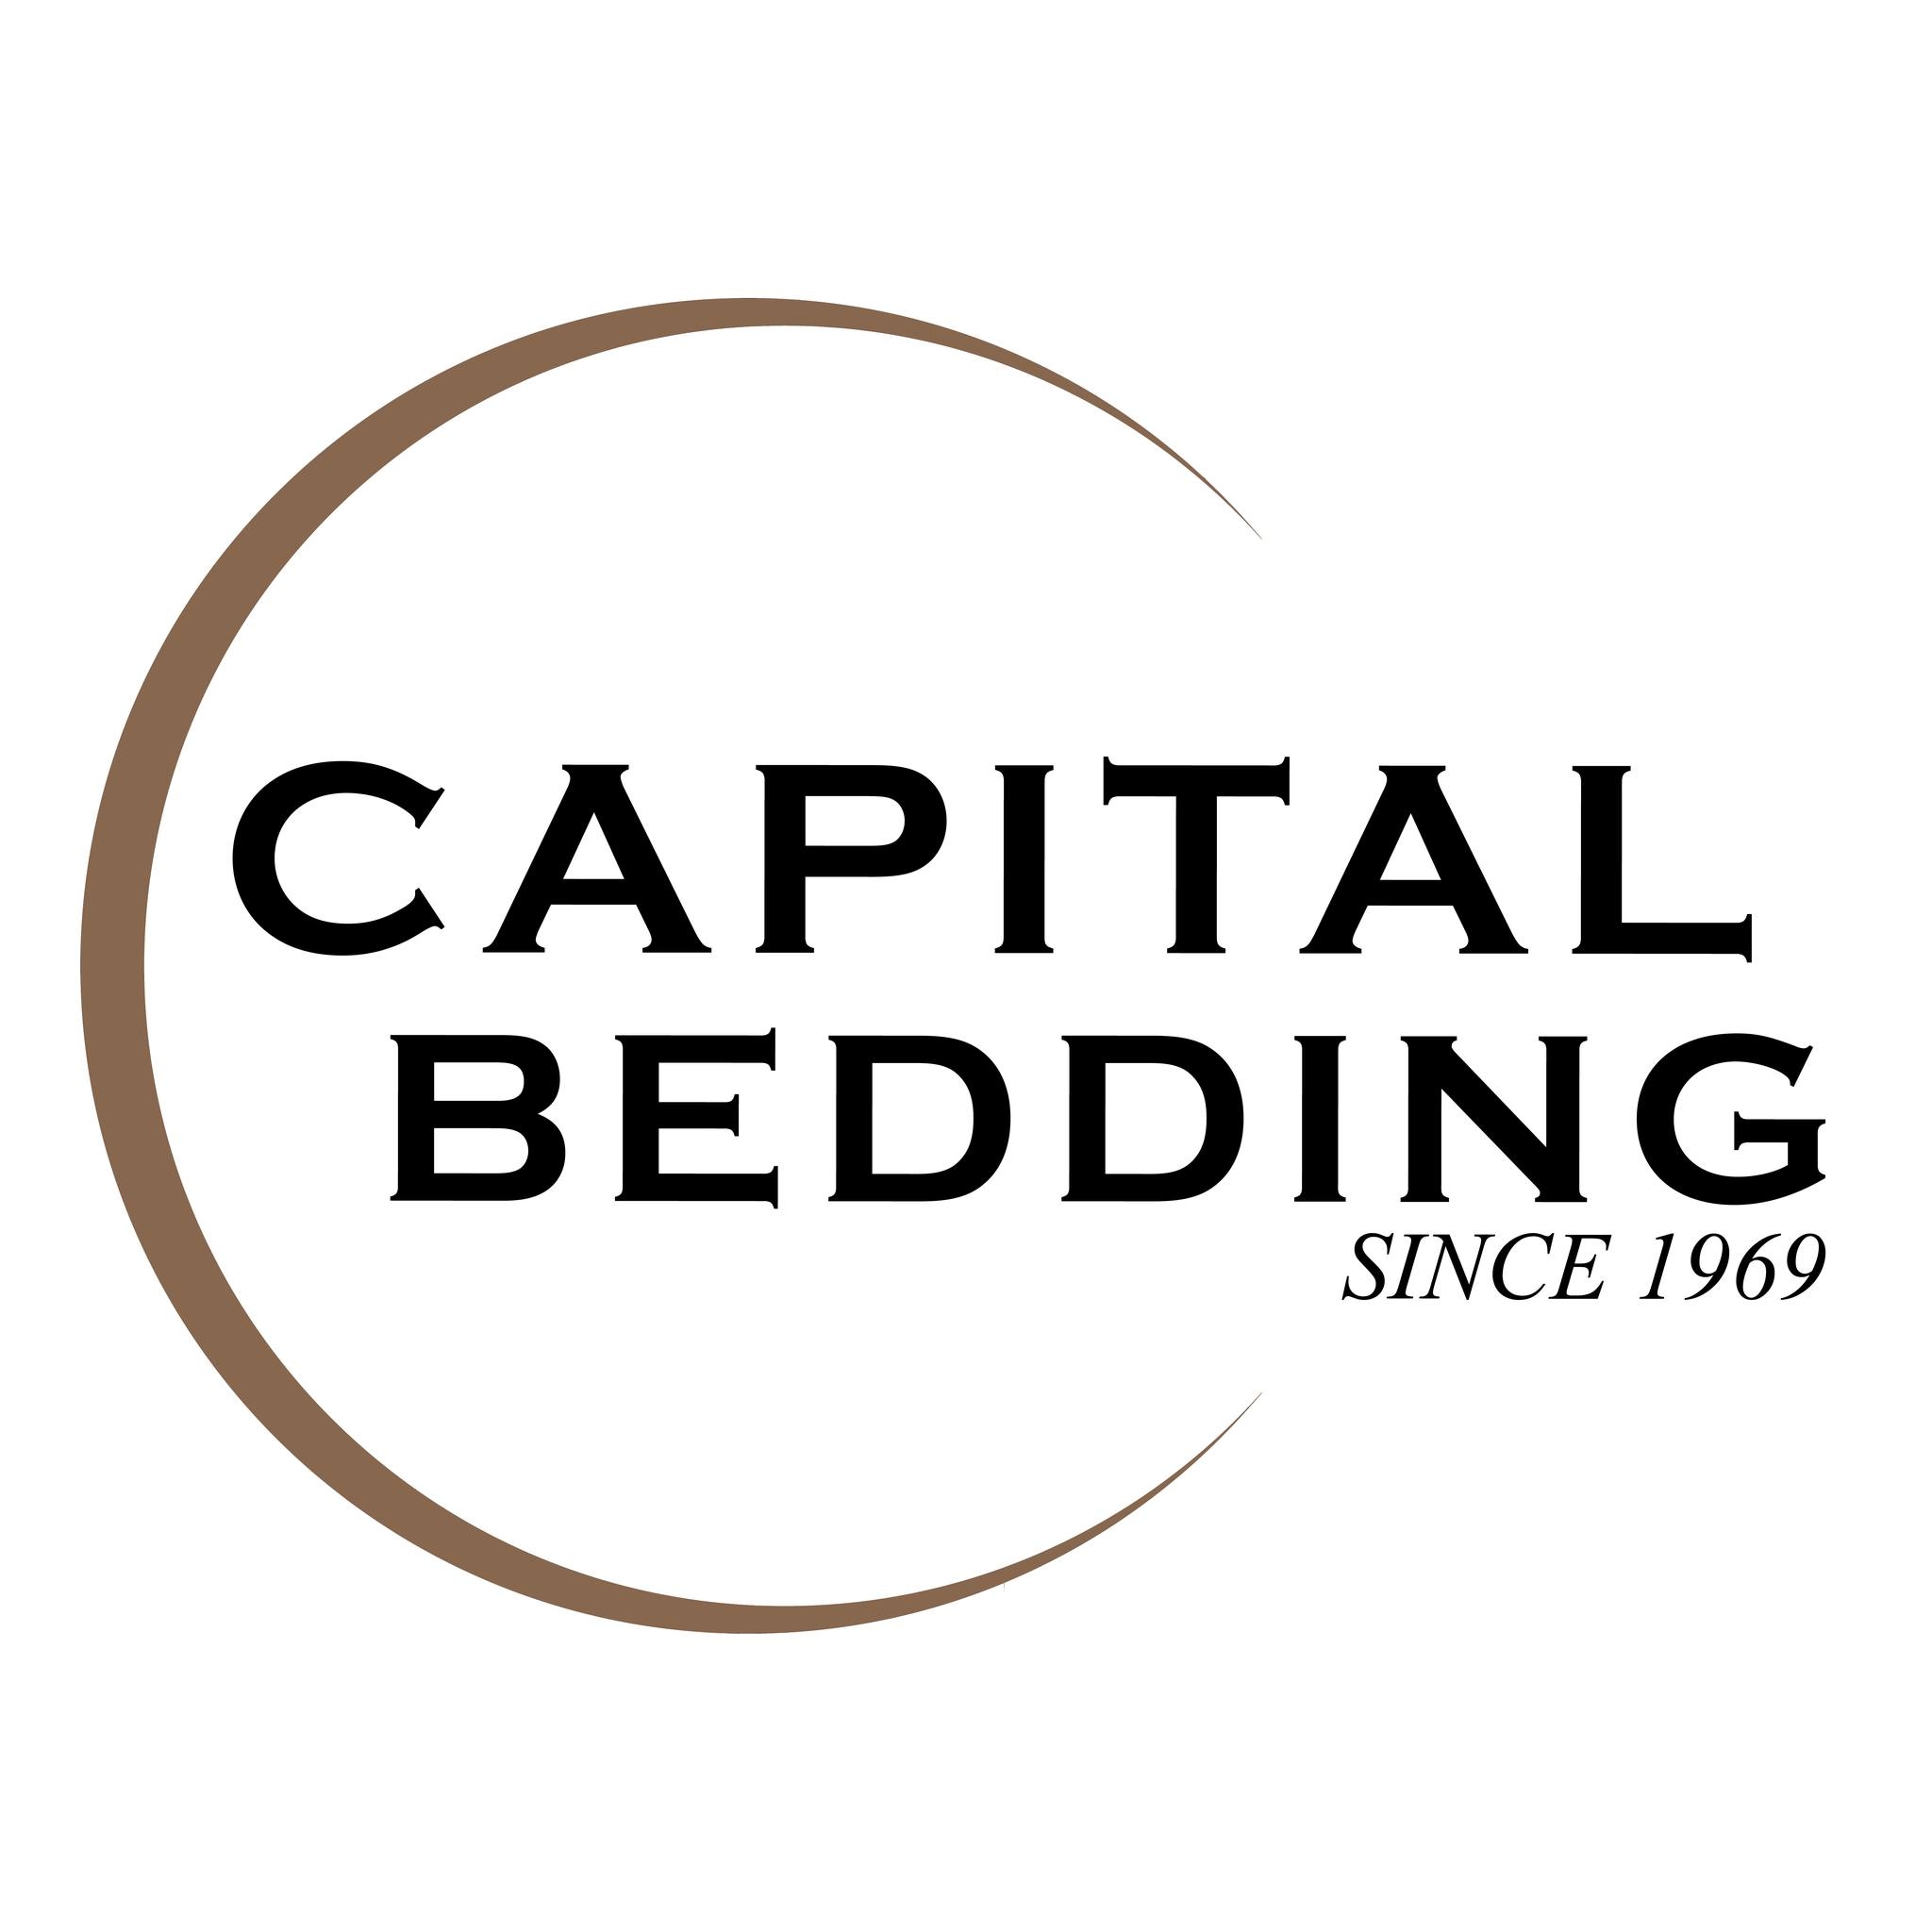 Capital Bedding